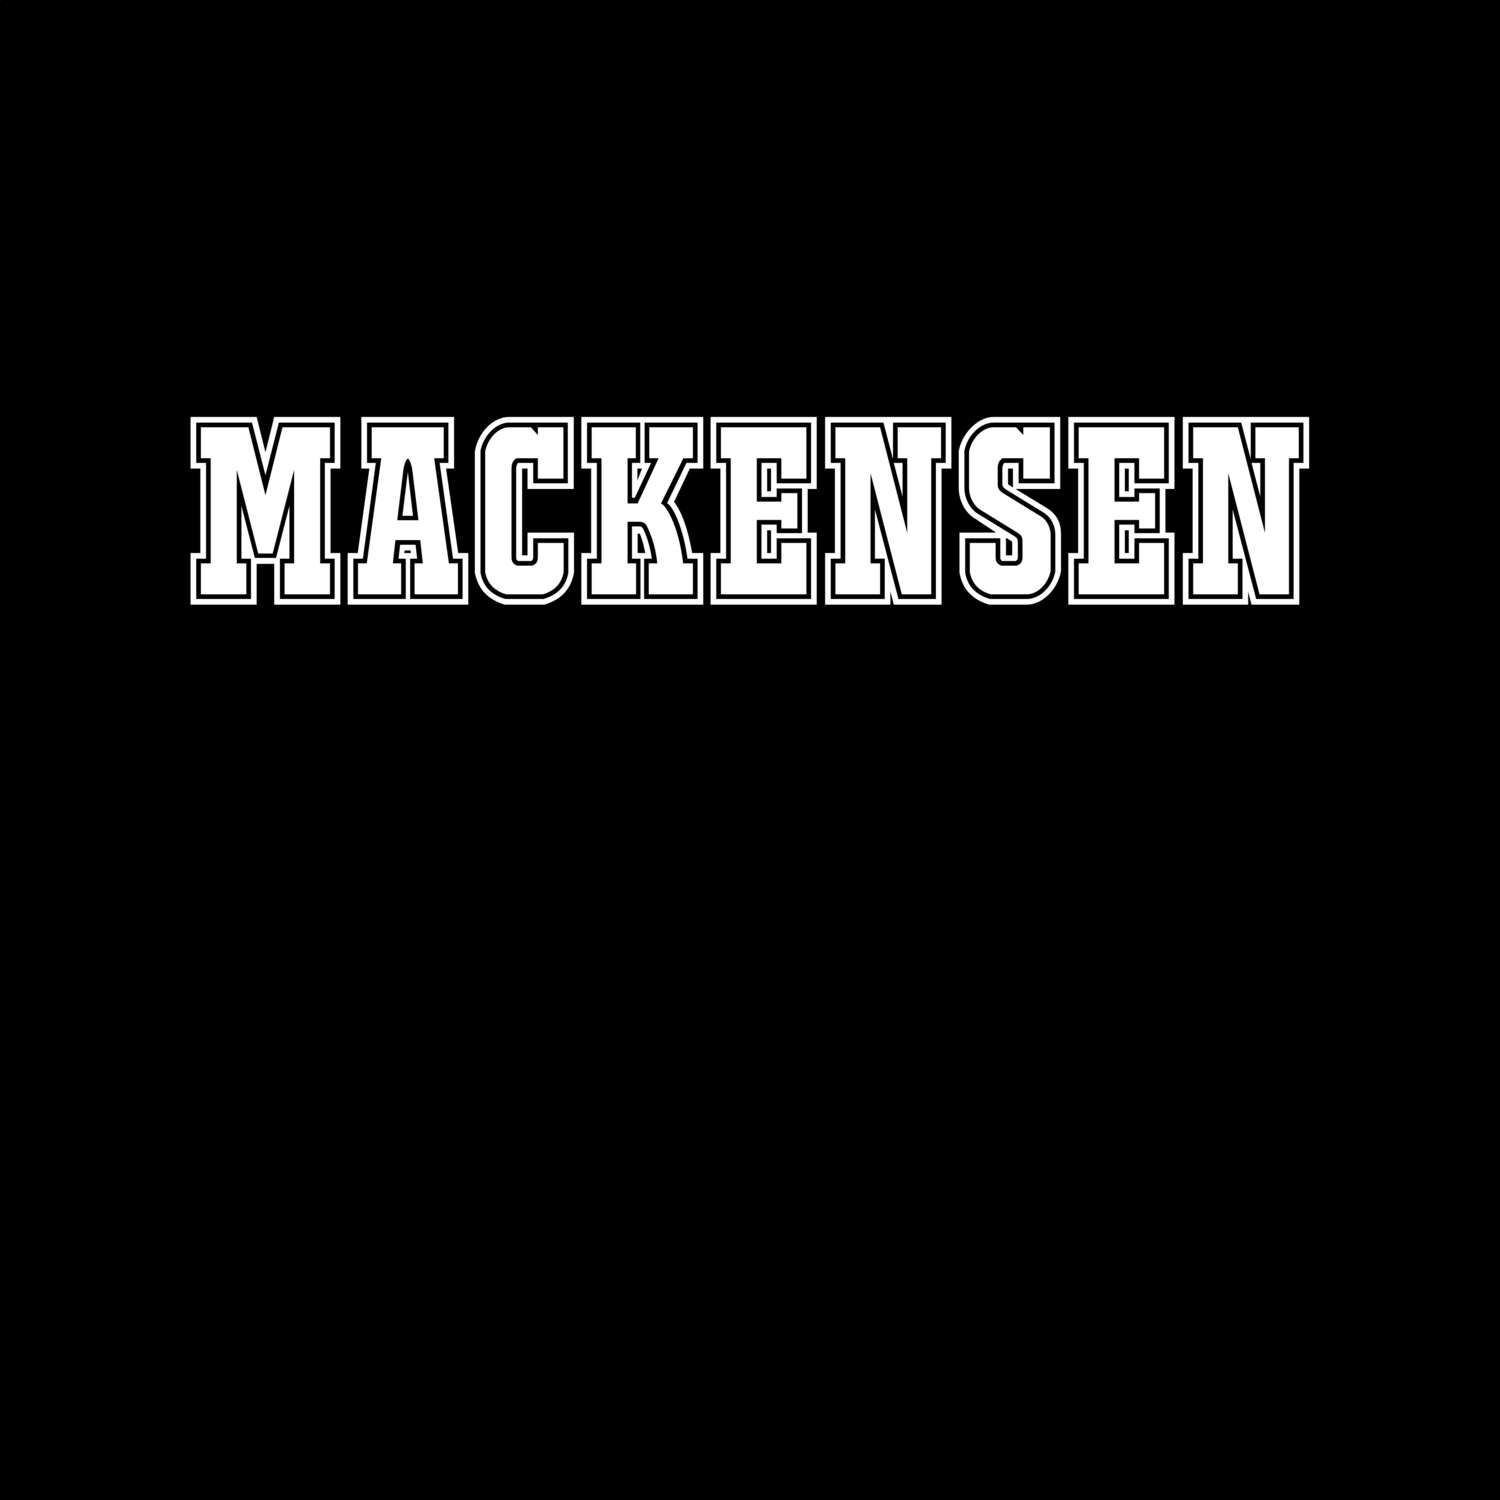 Mackensen T-Shirt »Classic«